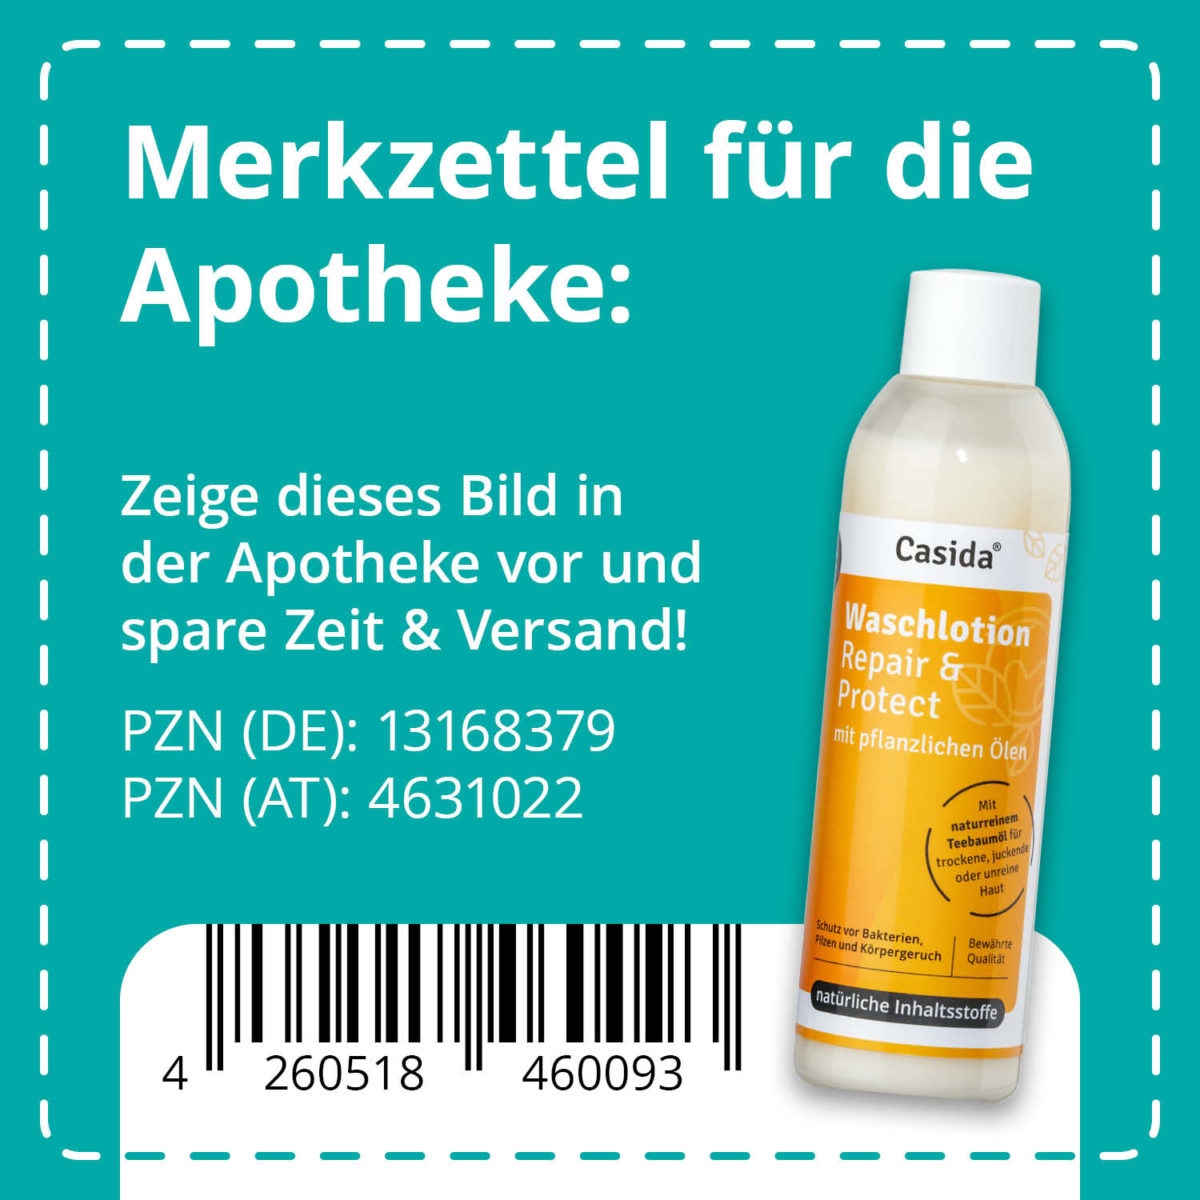 Casida Washing Lotion Repair & Protect 200 ml 13168379 PZN Apotheke Nagelpilz Fußpilz5